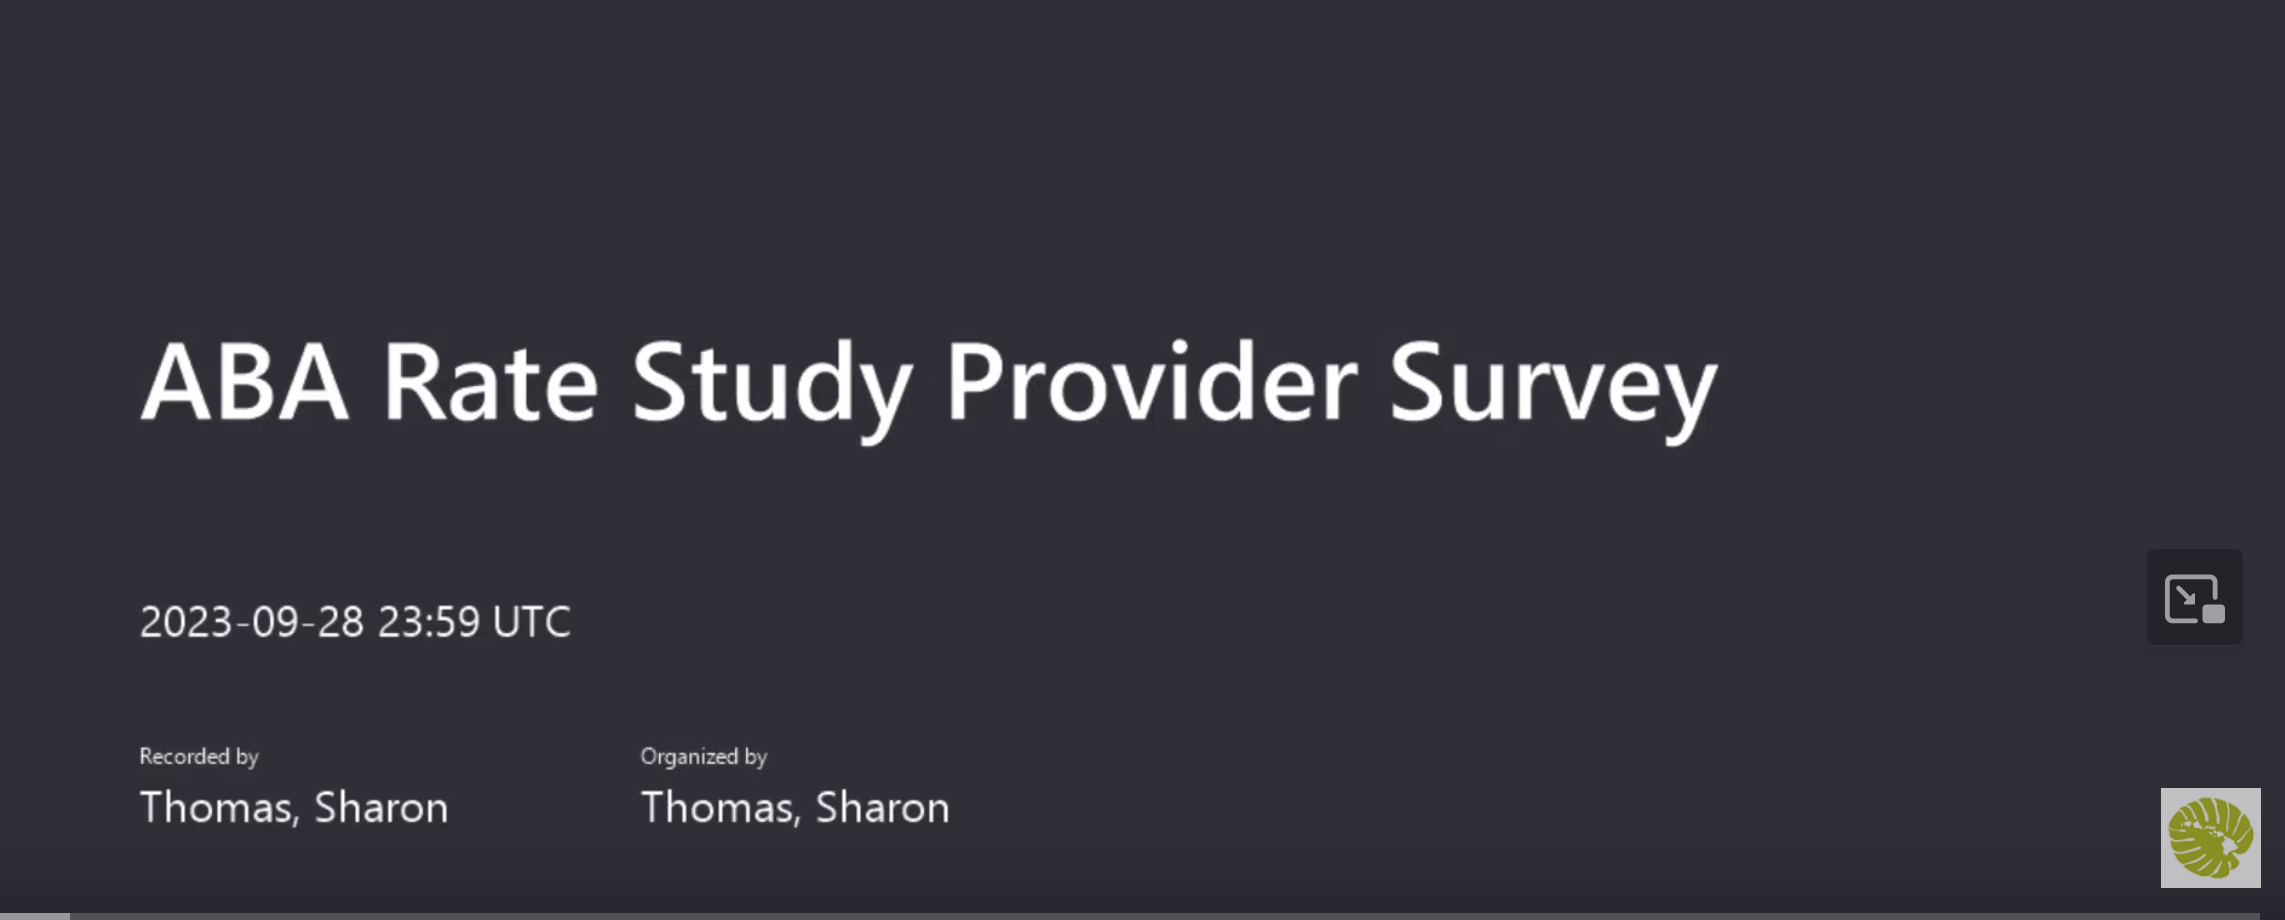 ABA Rate Study Provider Survey 